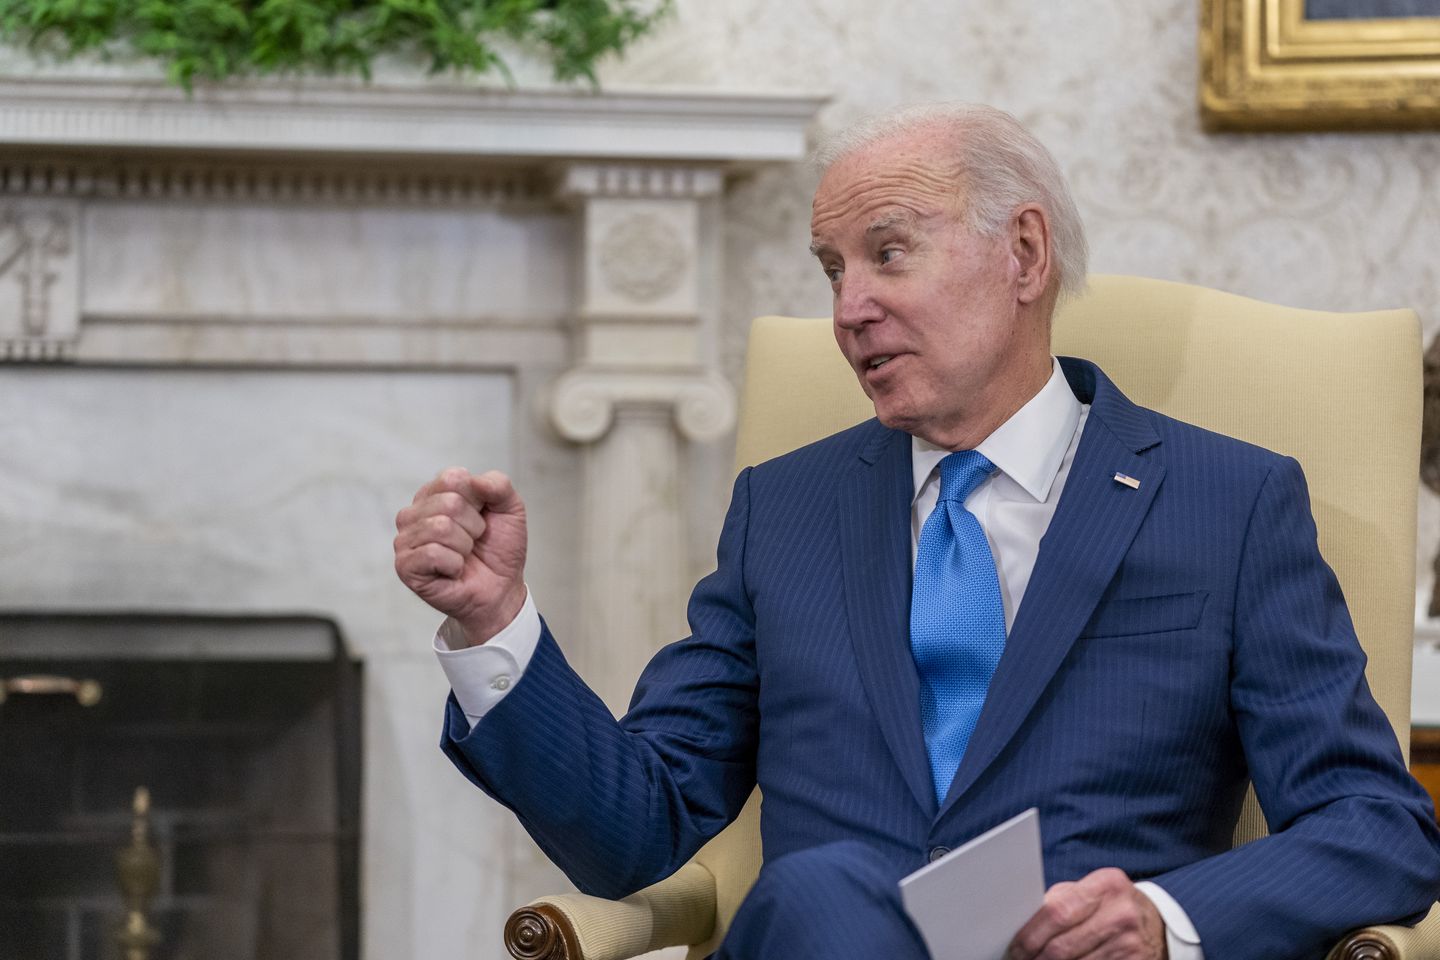 Joe Biden's Super Bowl interview off again, White House says Fox statement 'inaccurate'